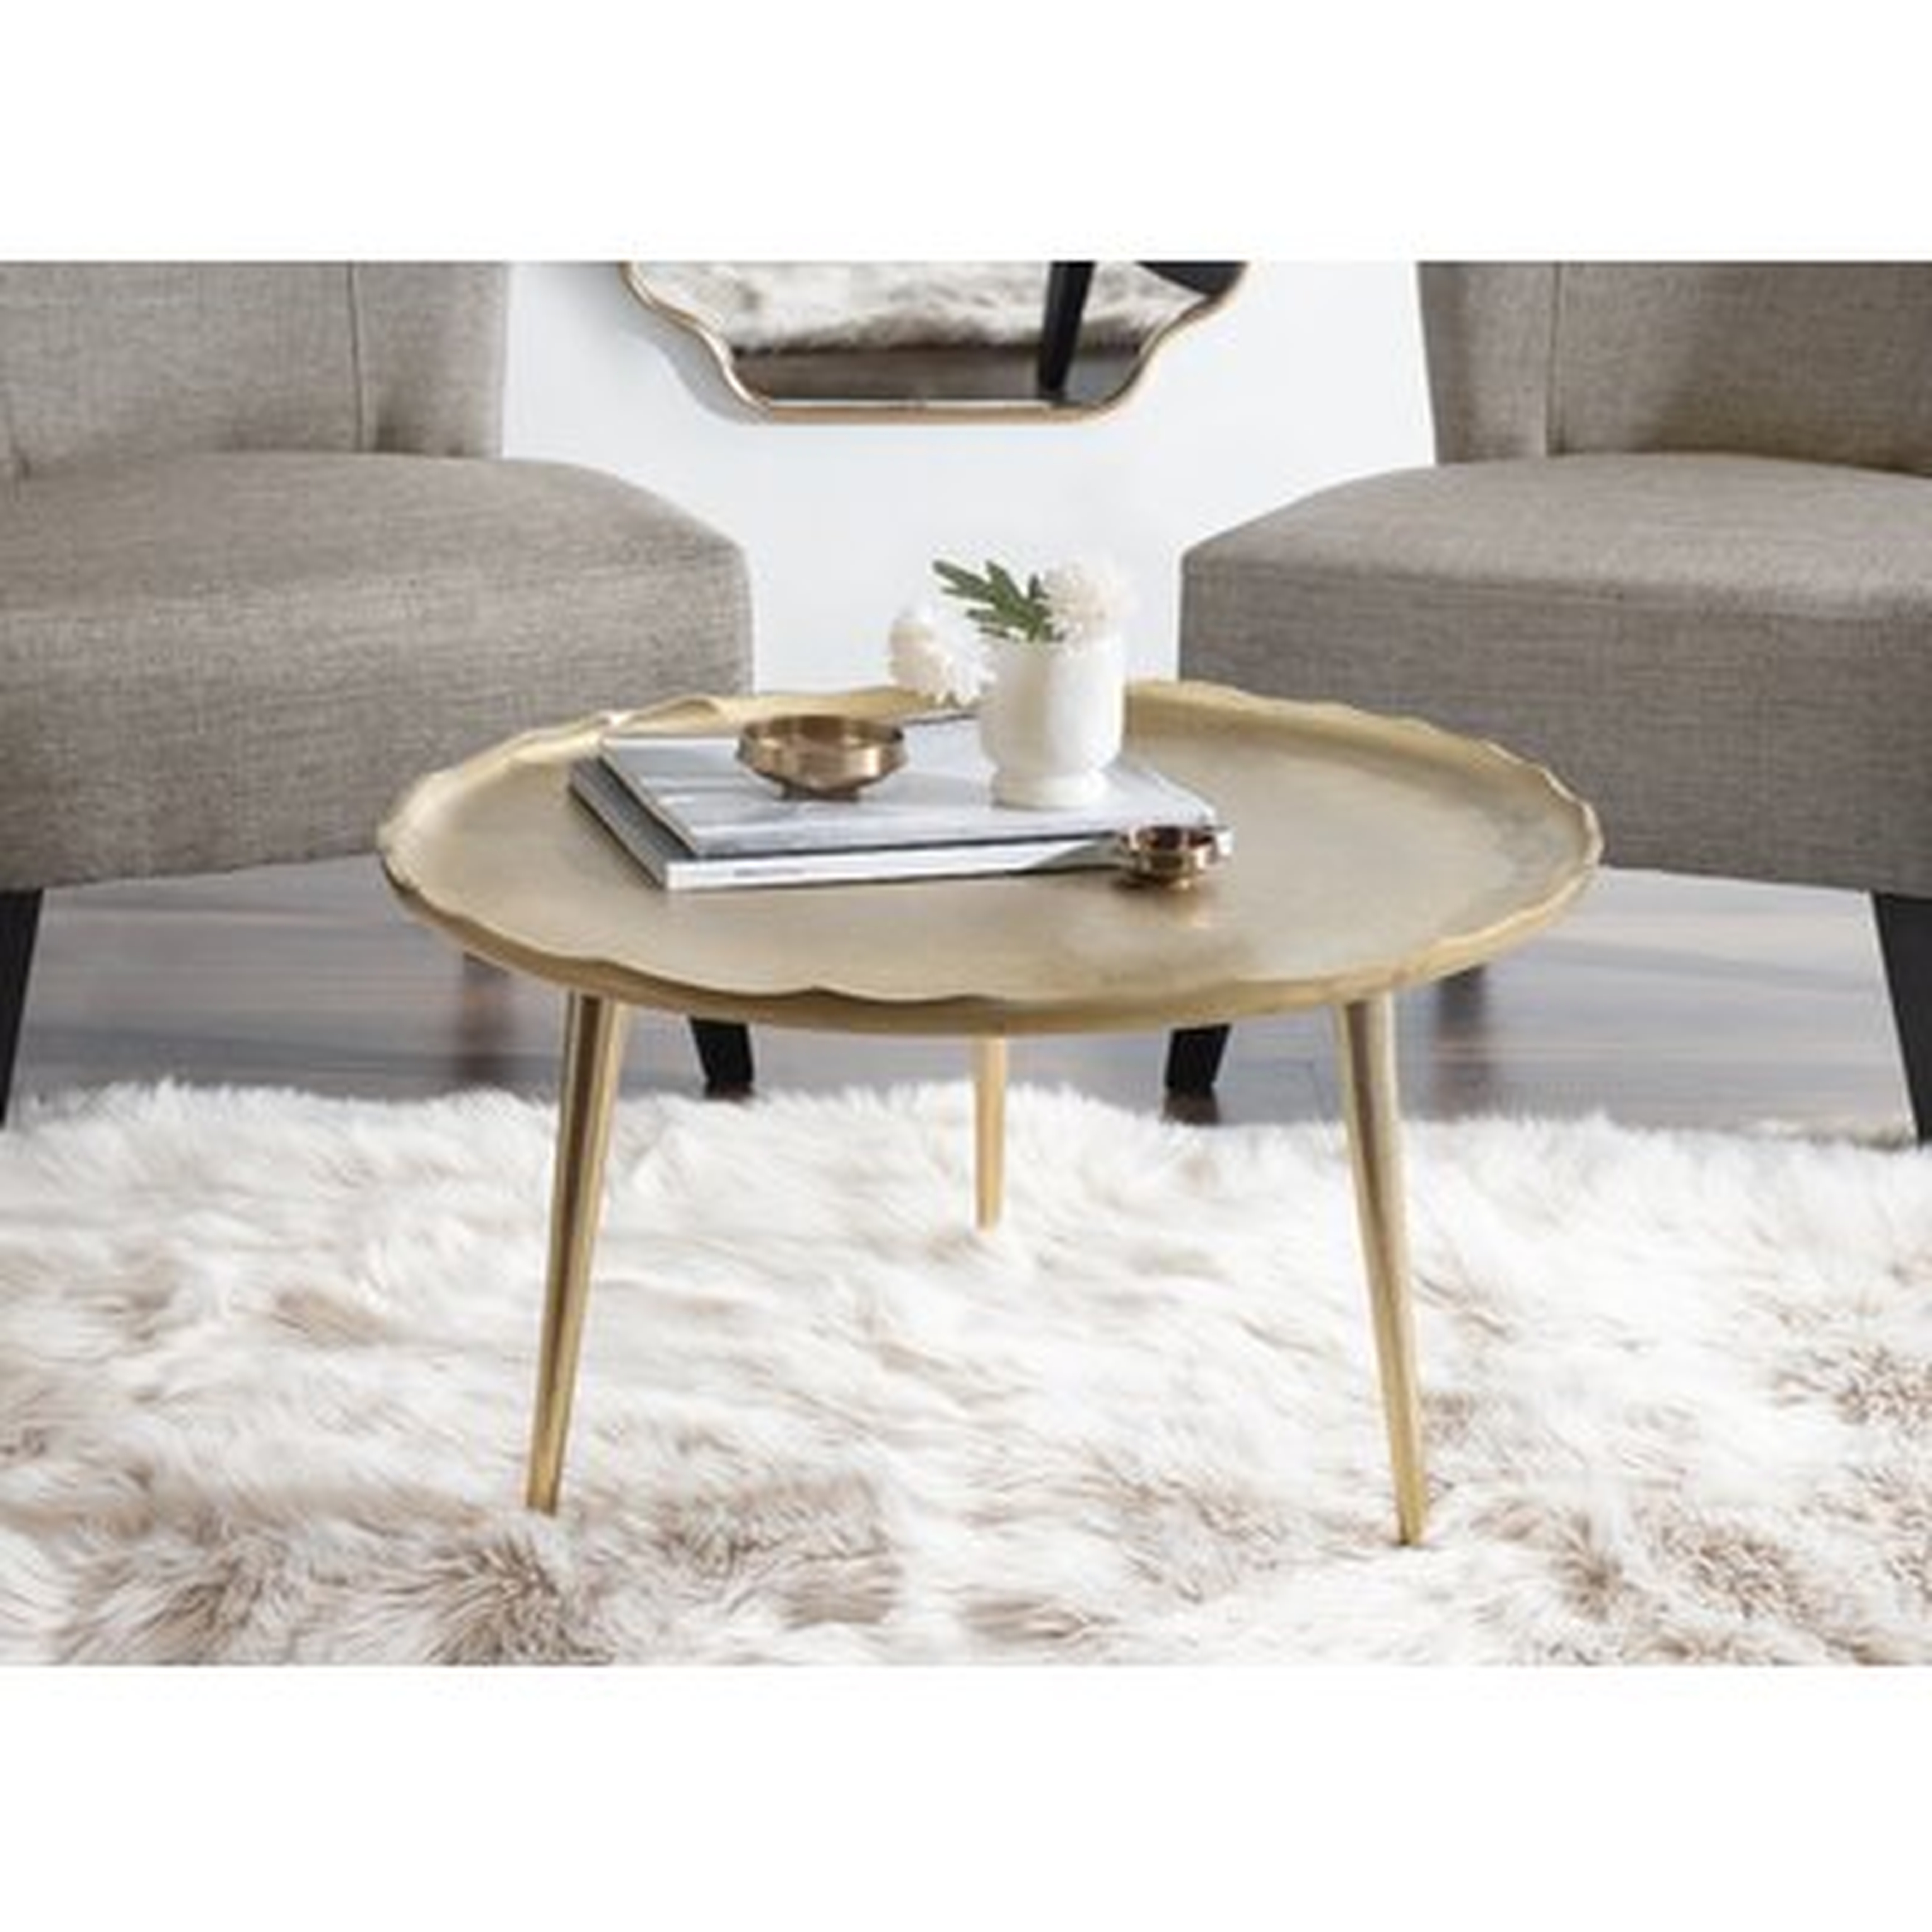 Everly Quinn Alessia Round Coffee Table 25X25x15 Gold - Wayfair